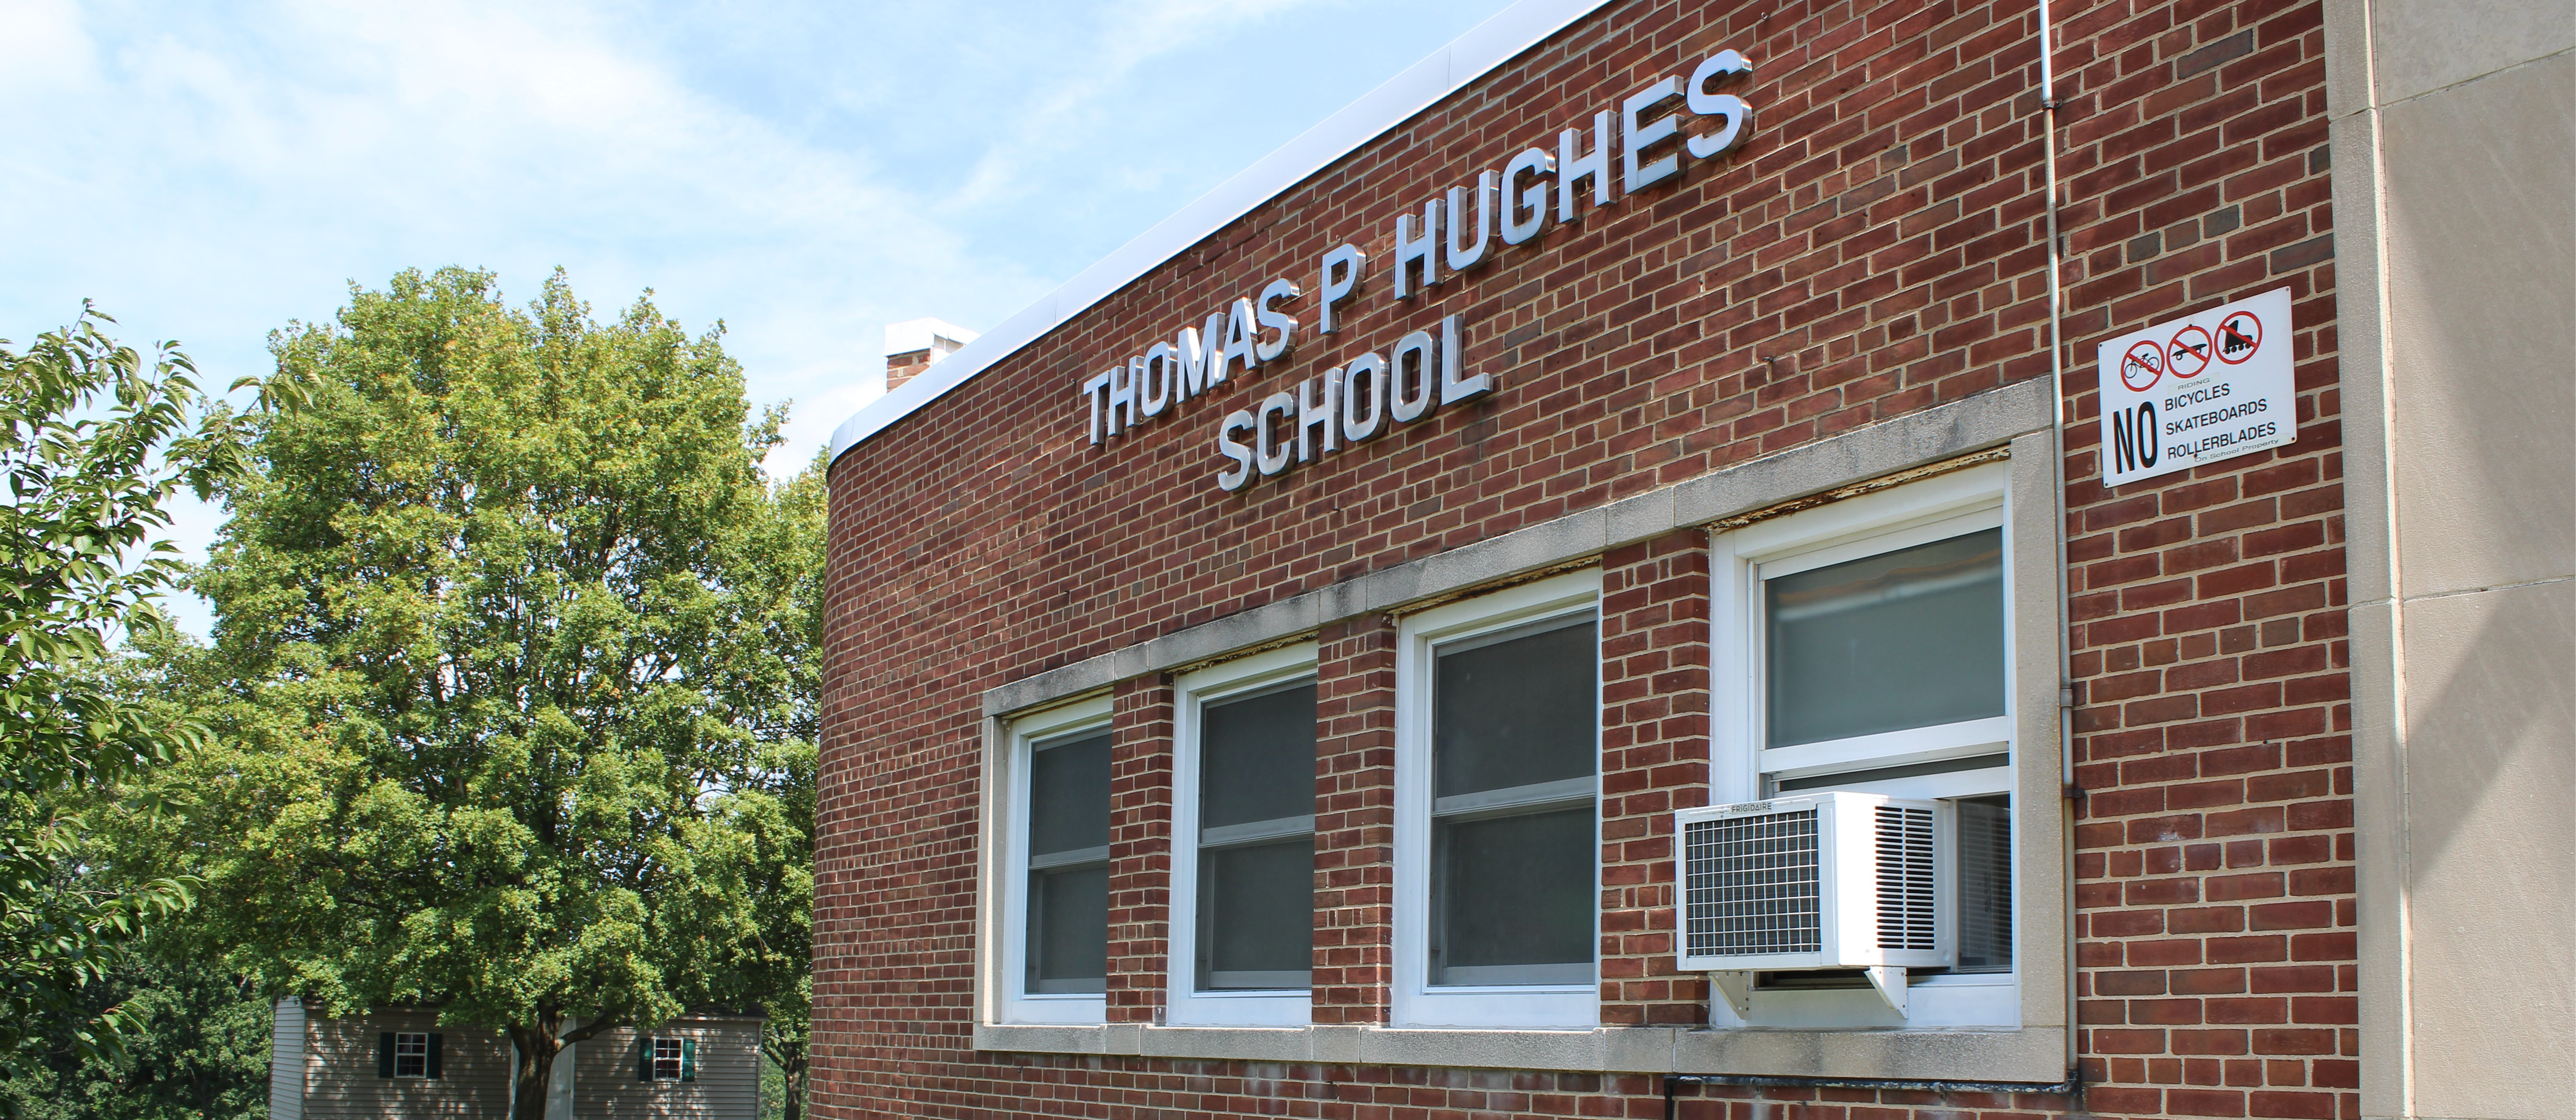 Thomas P Hughes Elementary School